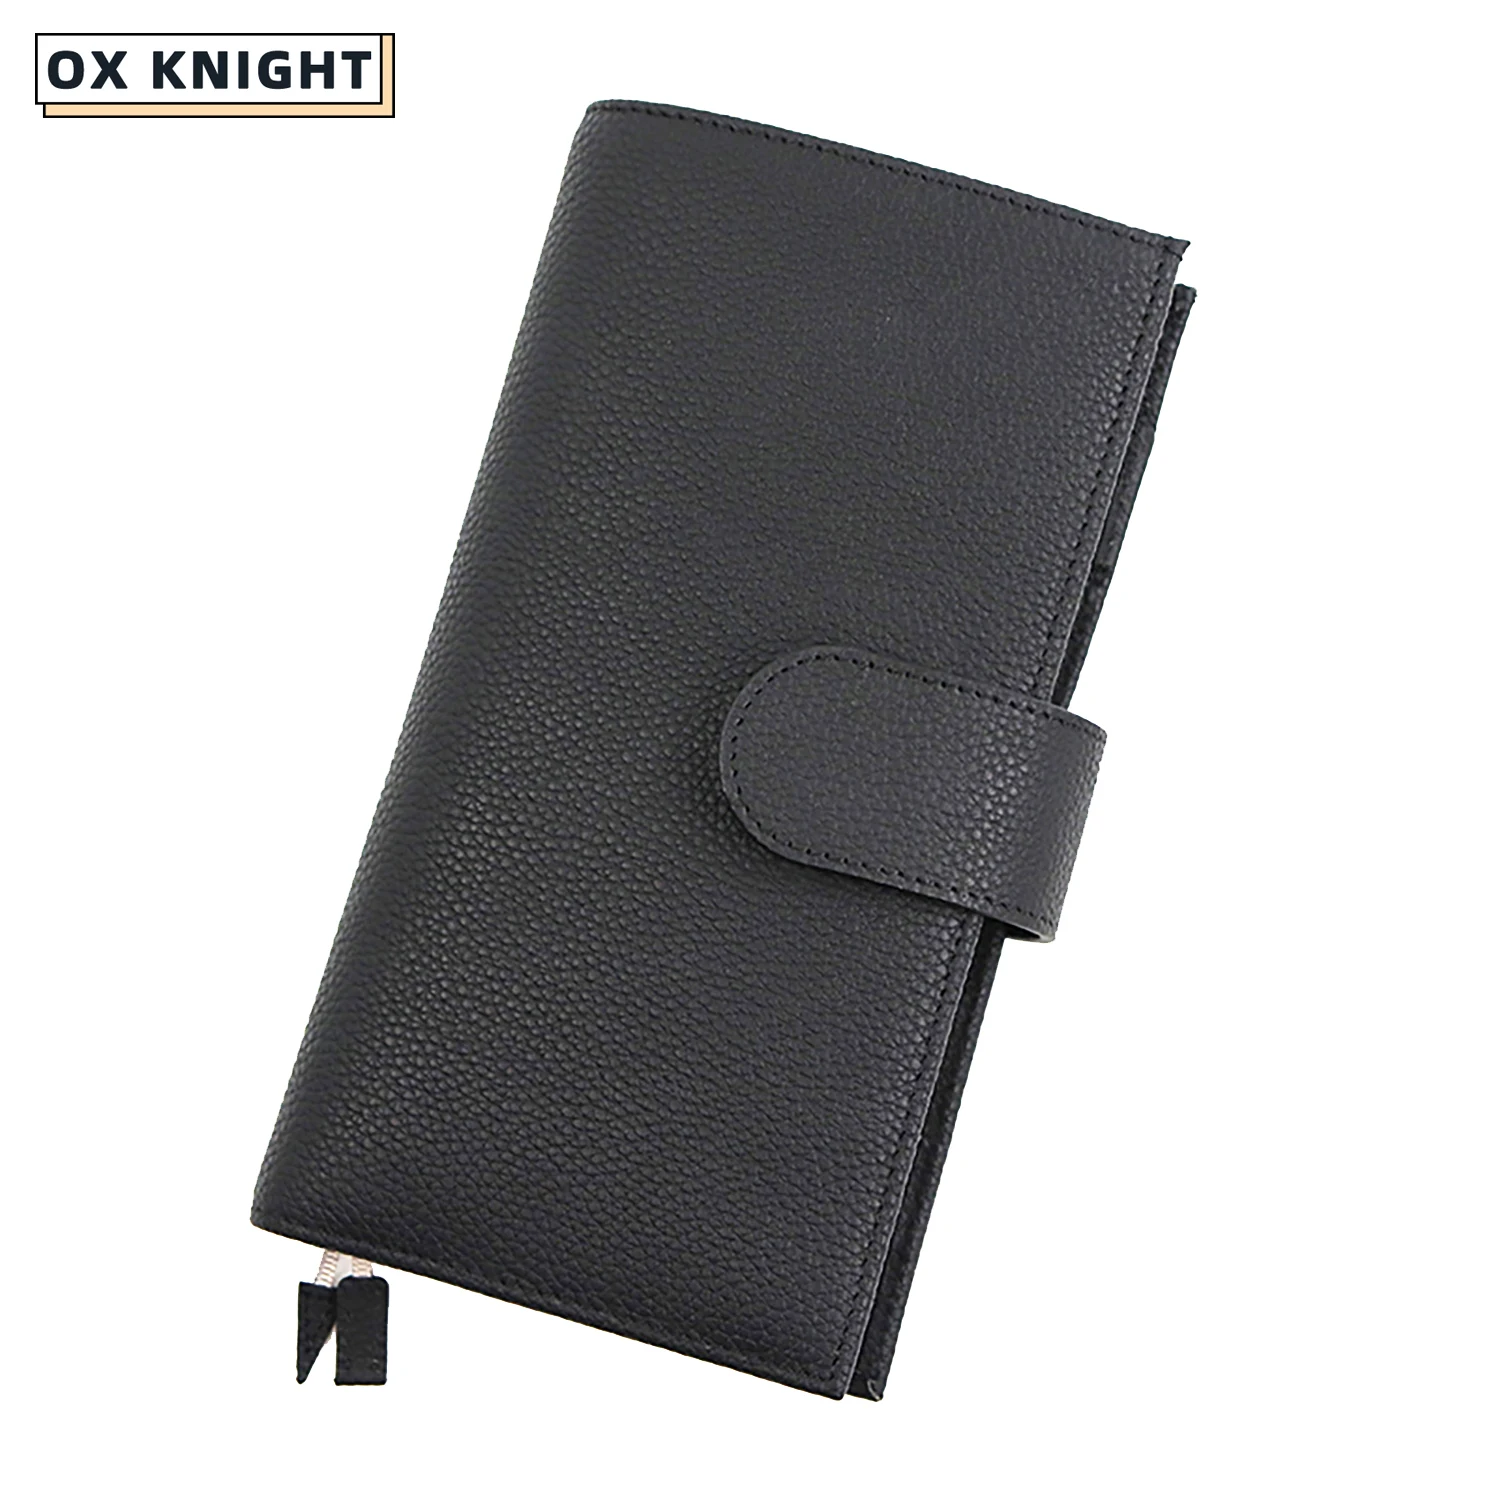 OX KNIGHT Standard Size Business Notebook Genuine Original Week Cover for Hobo Weeks Pebbled Leather Sketchbook Planner Oganizer